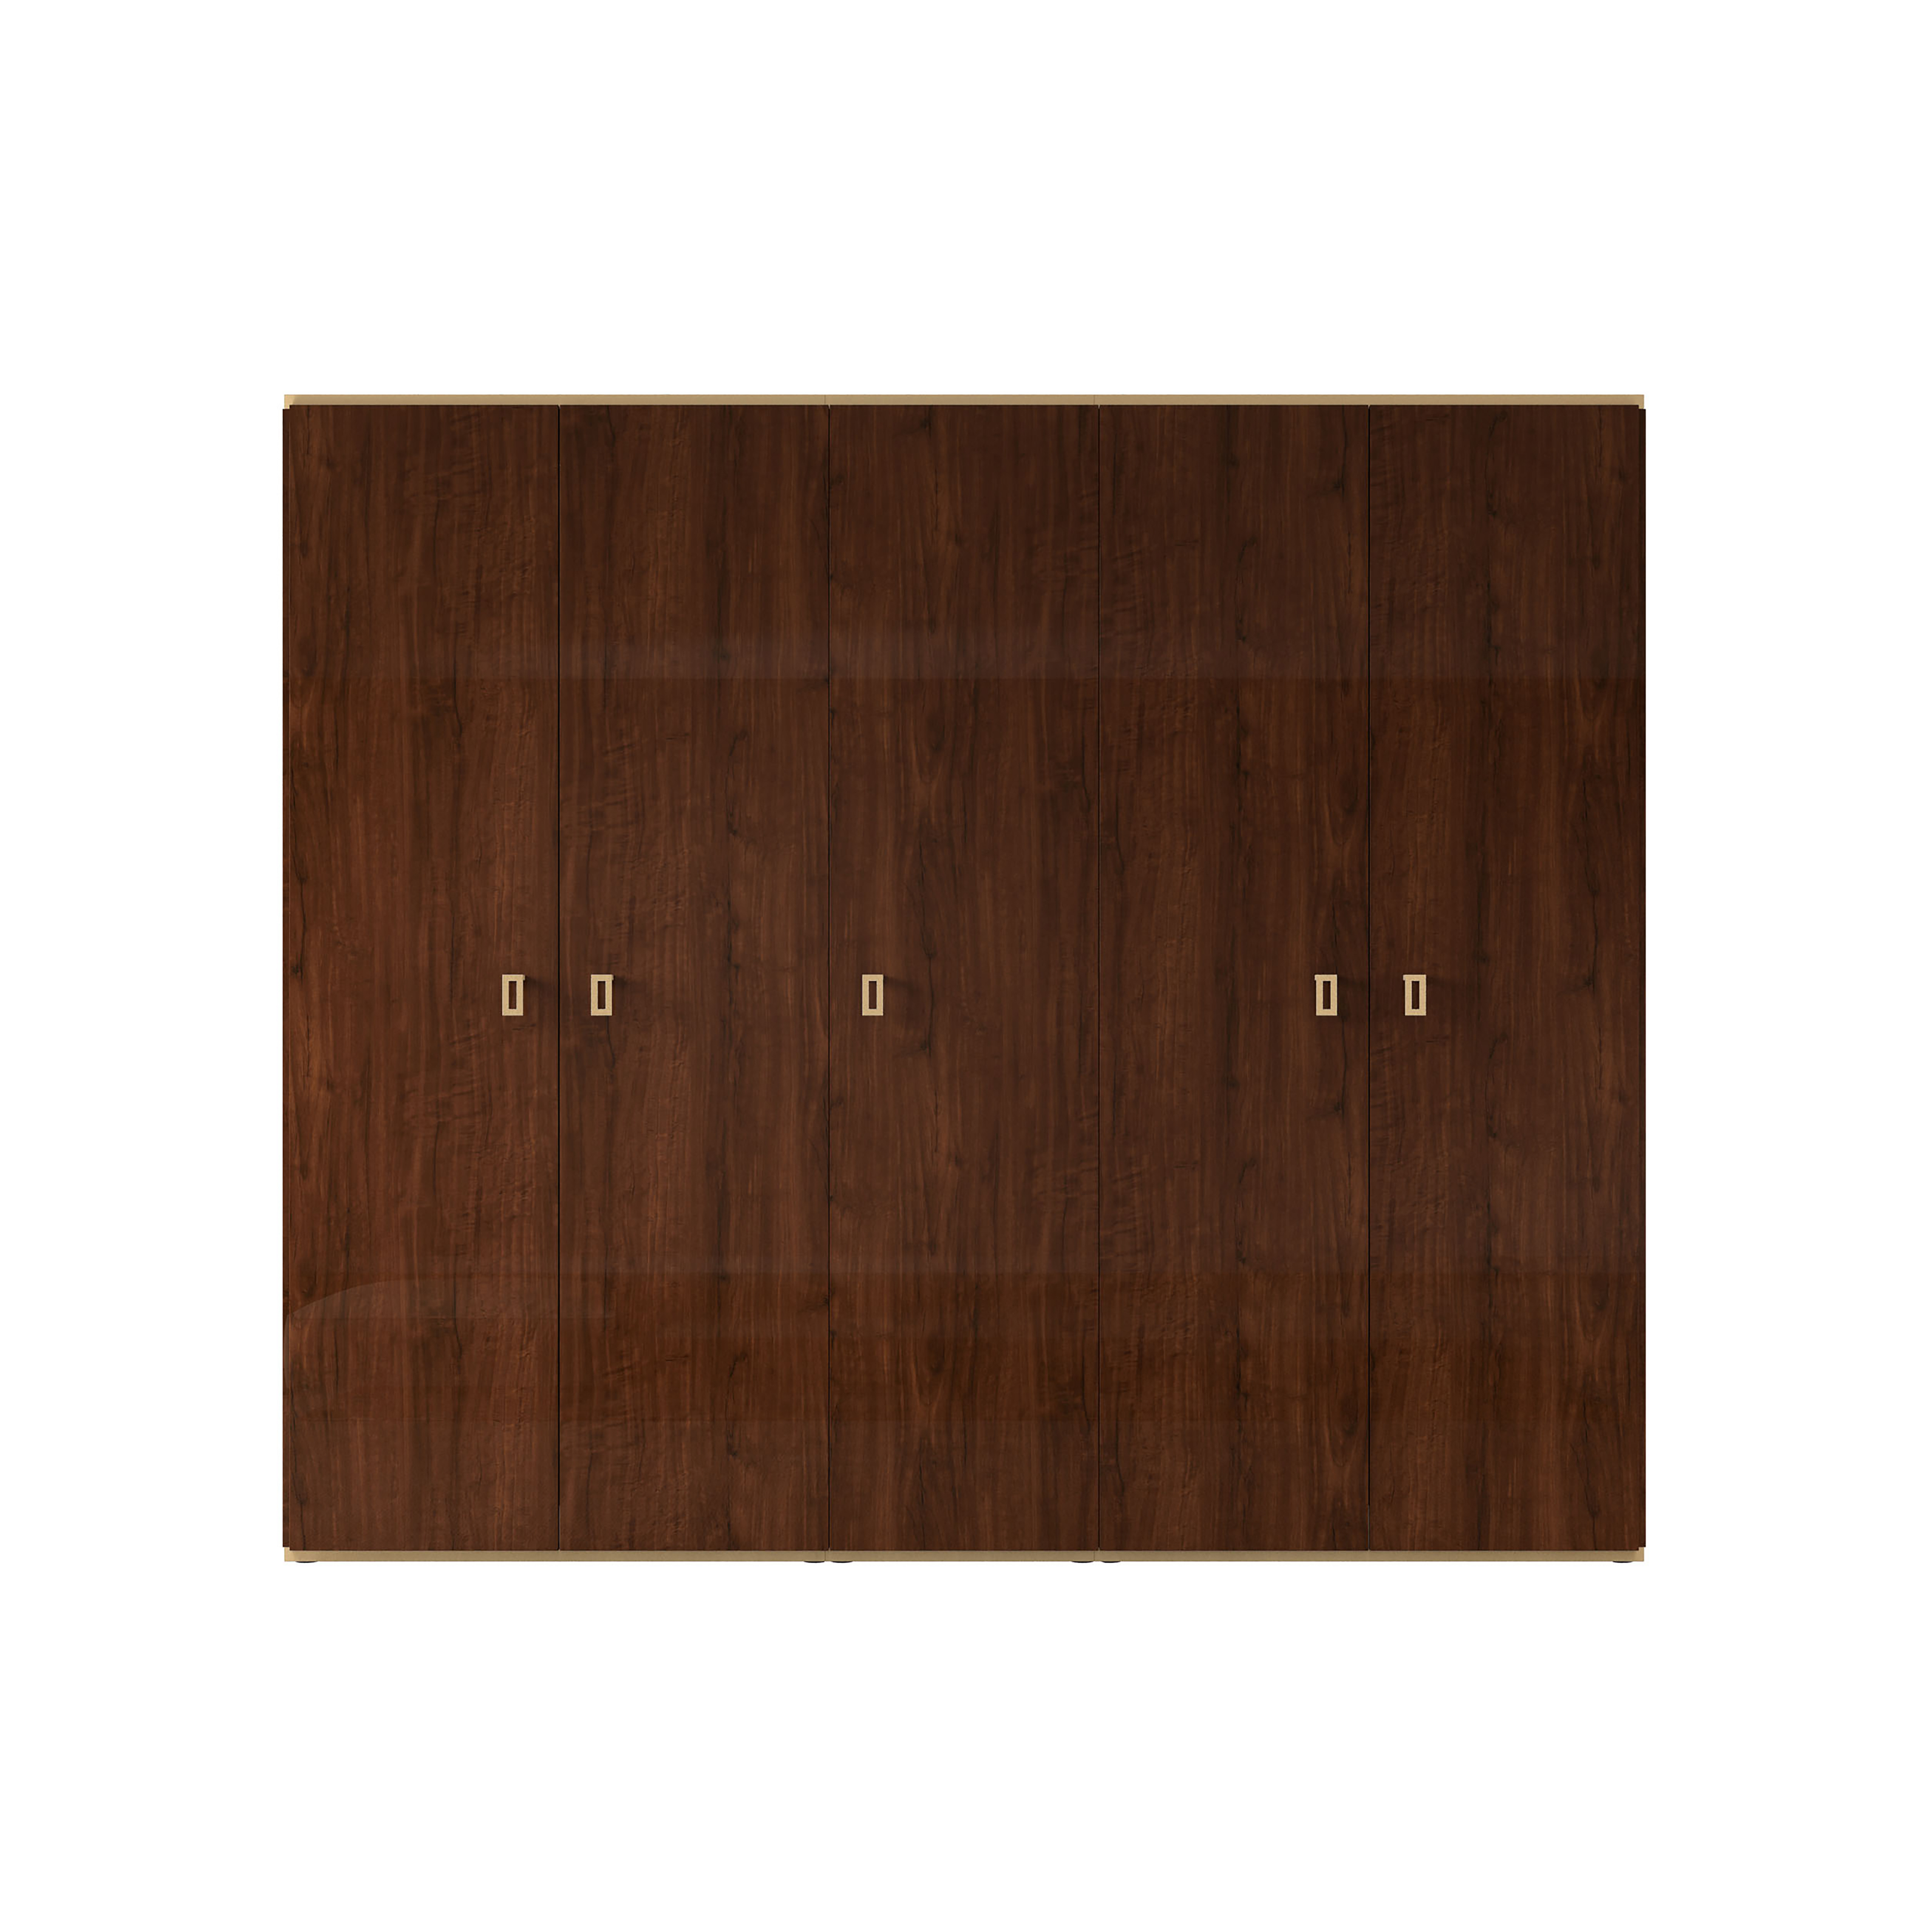 Шкаф Status Eva, пятидверный, цвет орех, 271x61x232 см (EABNOAR02)EABNOAR02